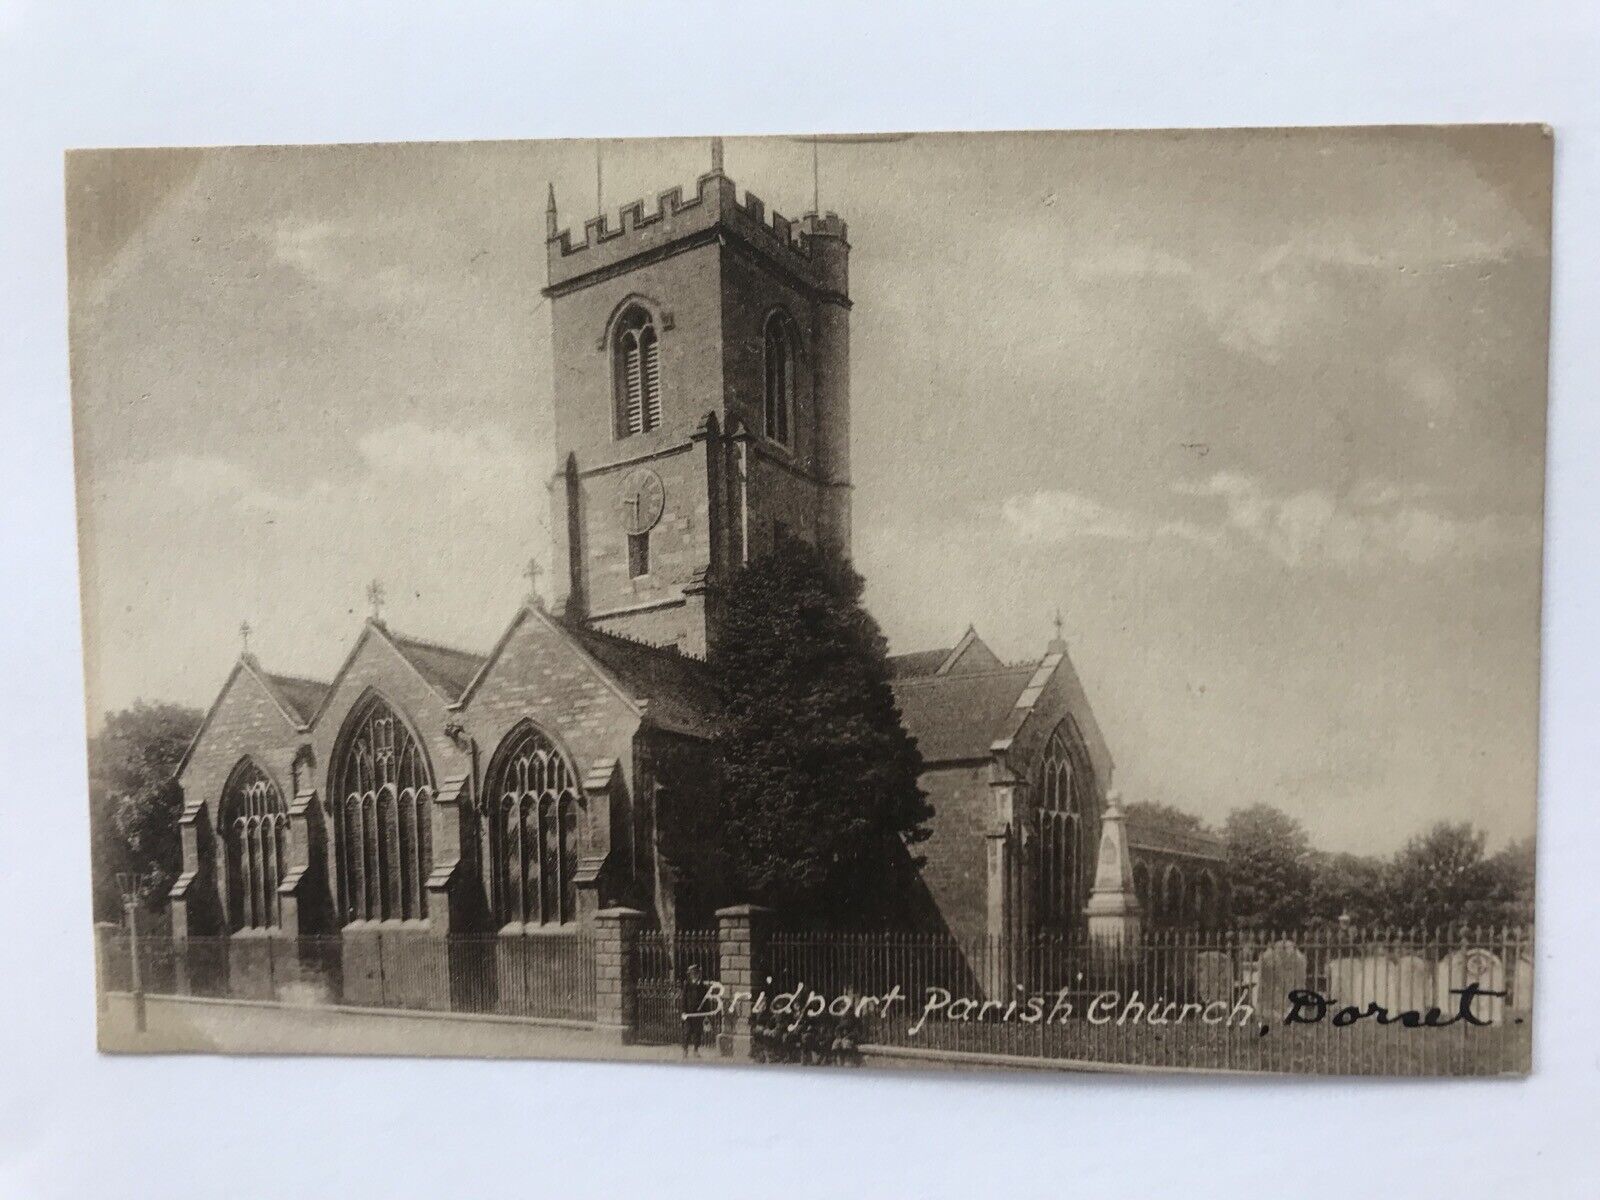  Bridport, Parish Church. Postcard. 